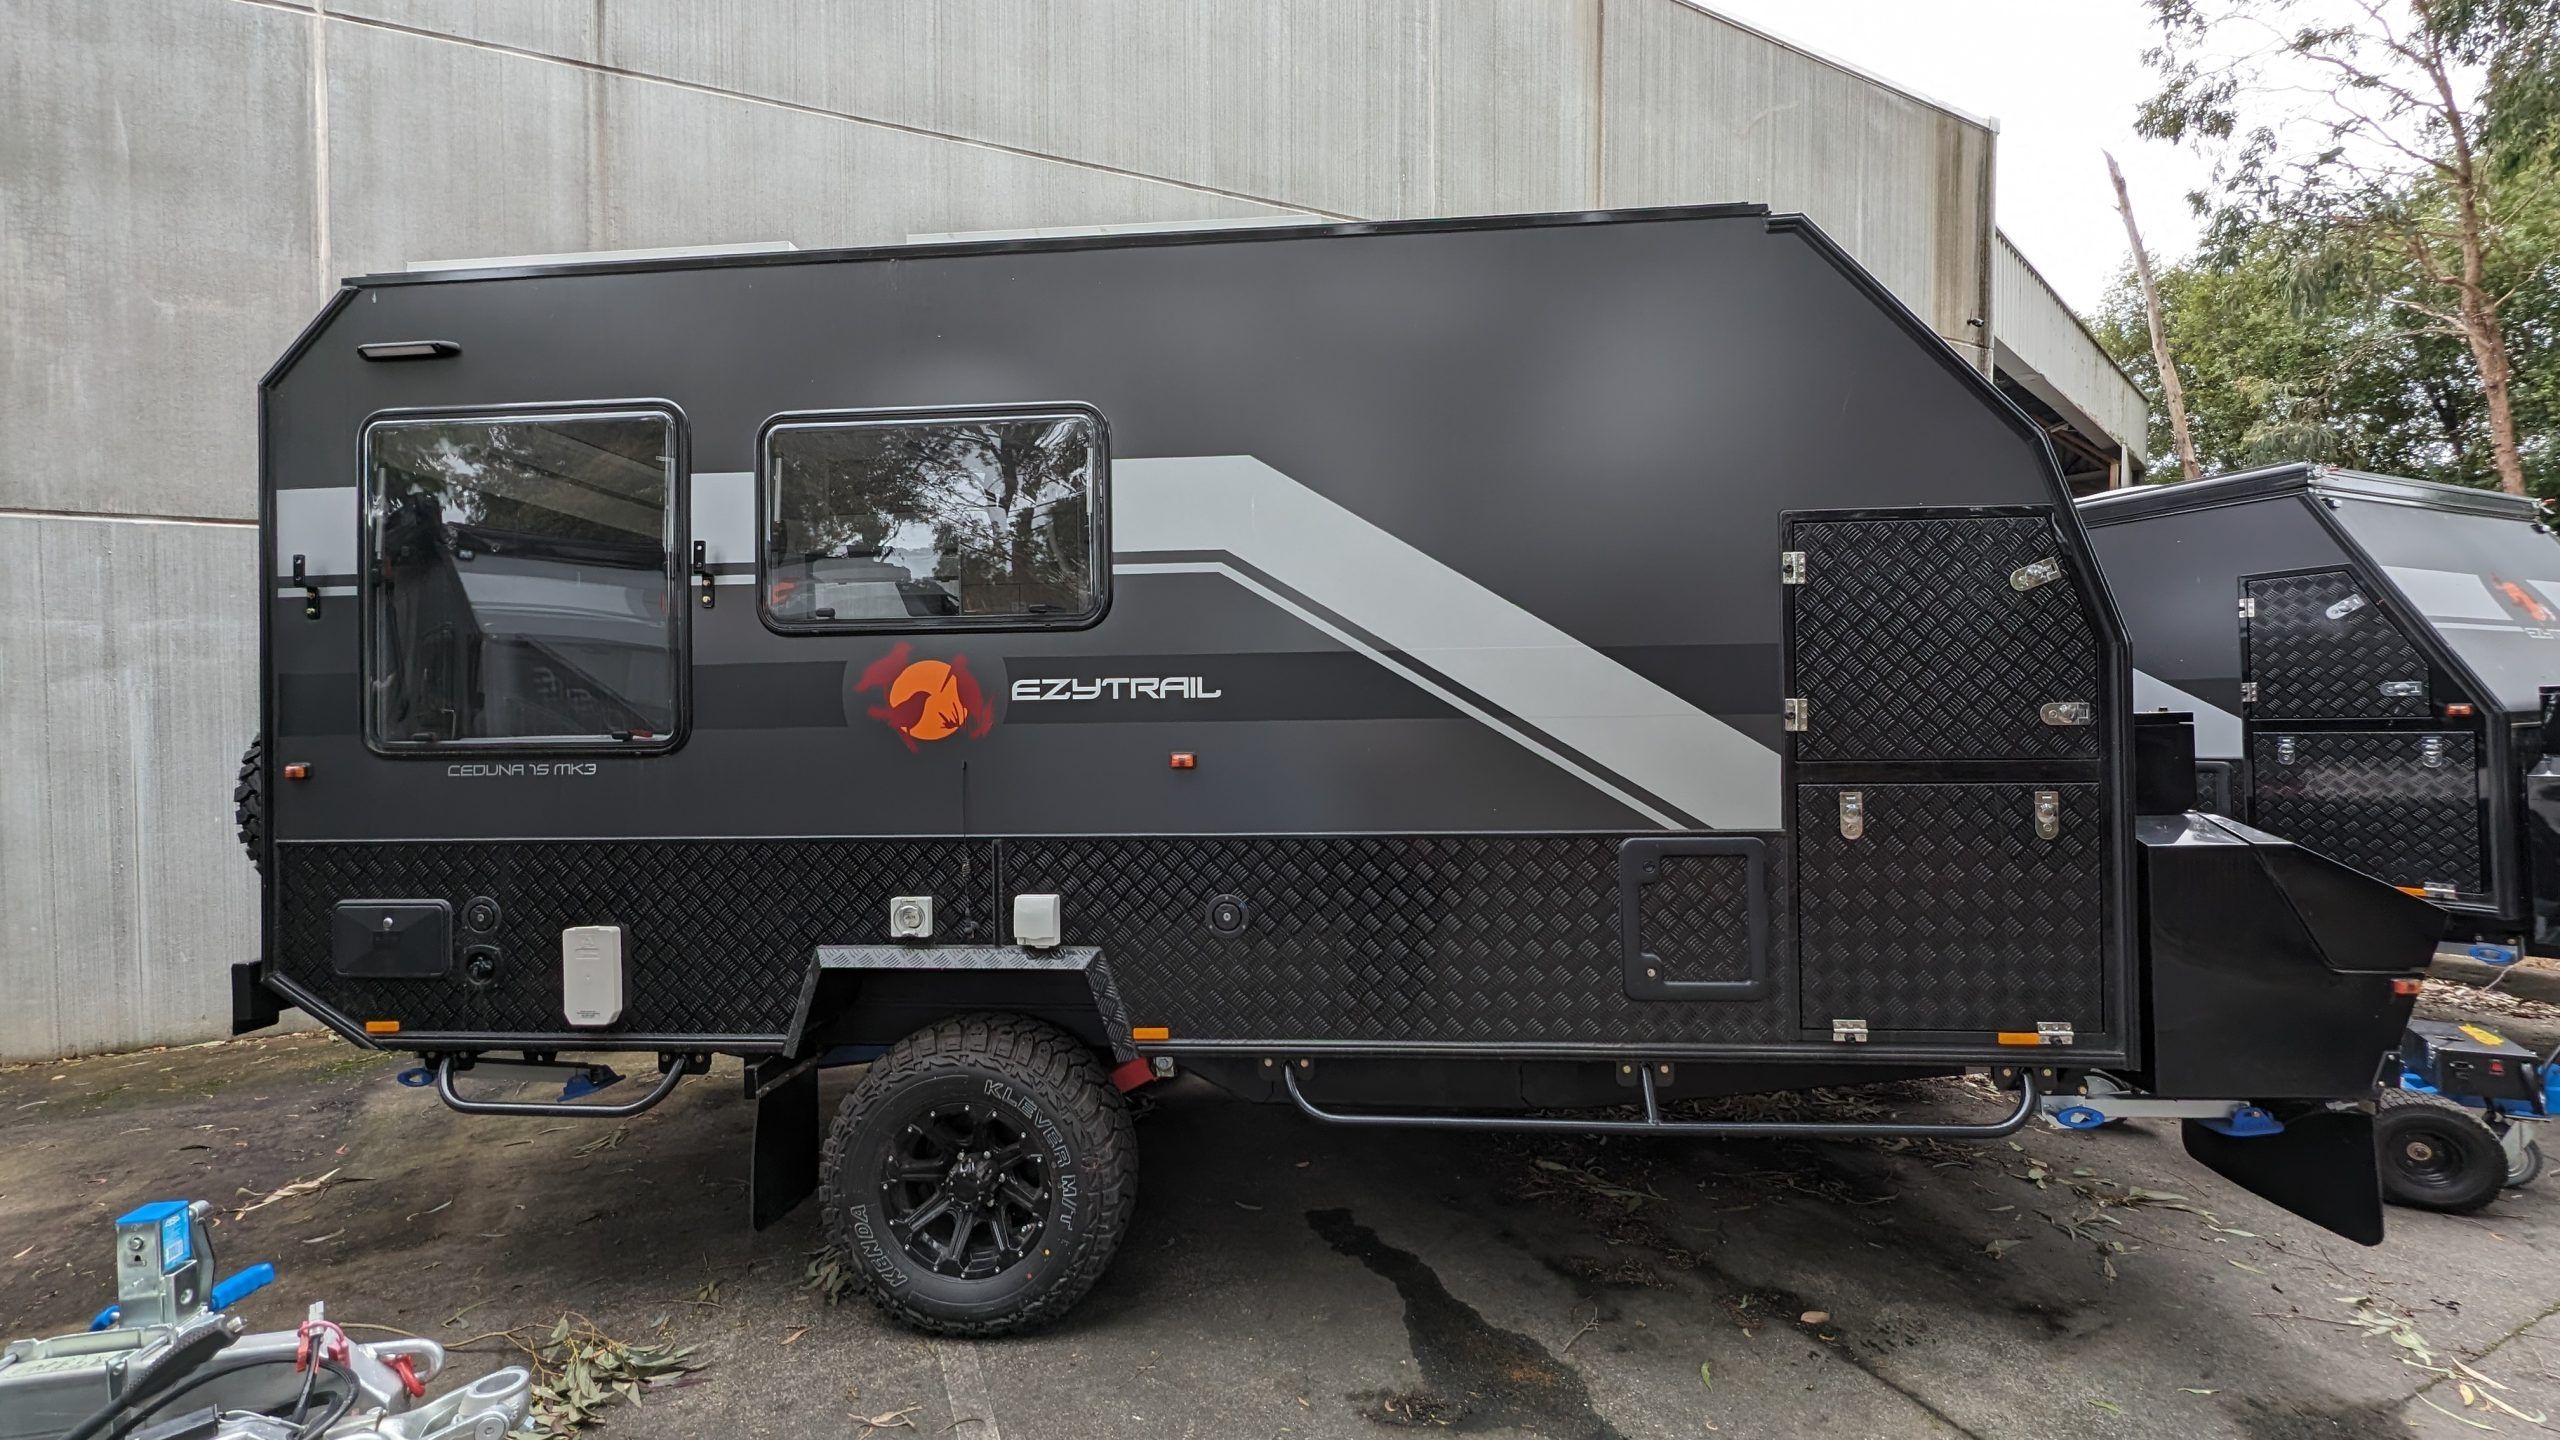 Side view of a black Ceduna 15 Twin MK3 Caravan